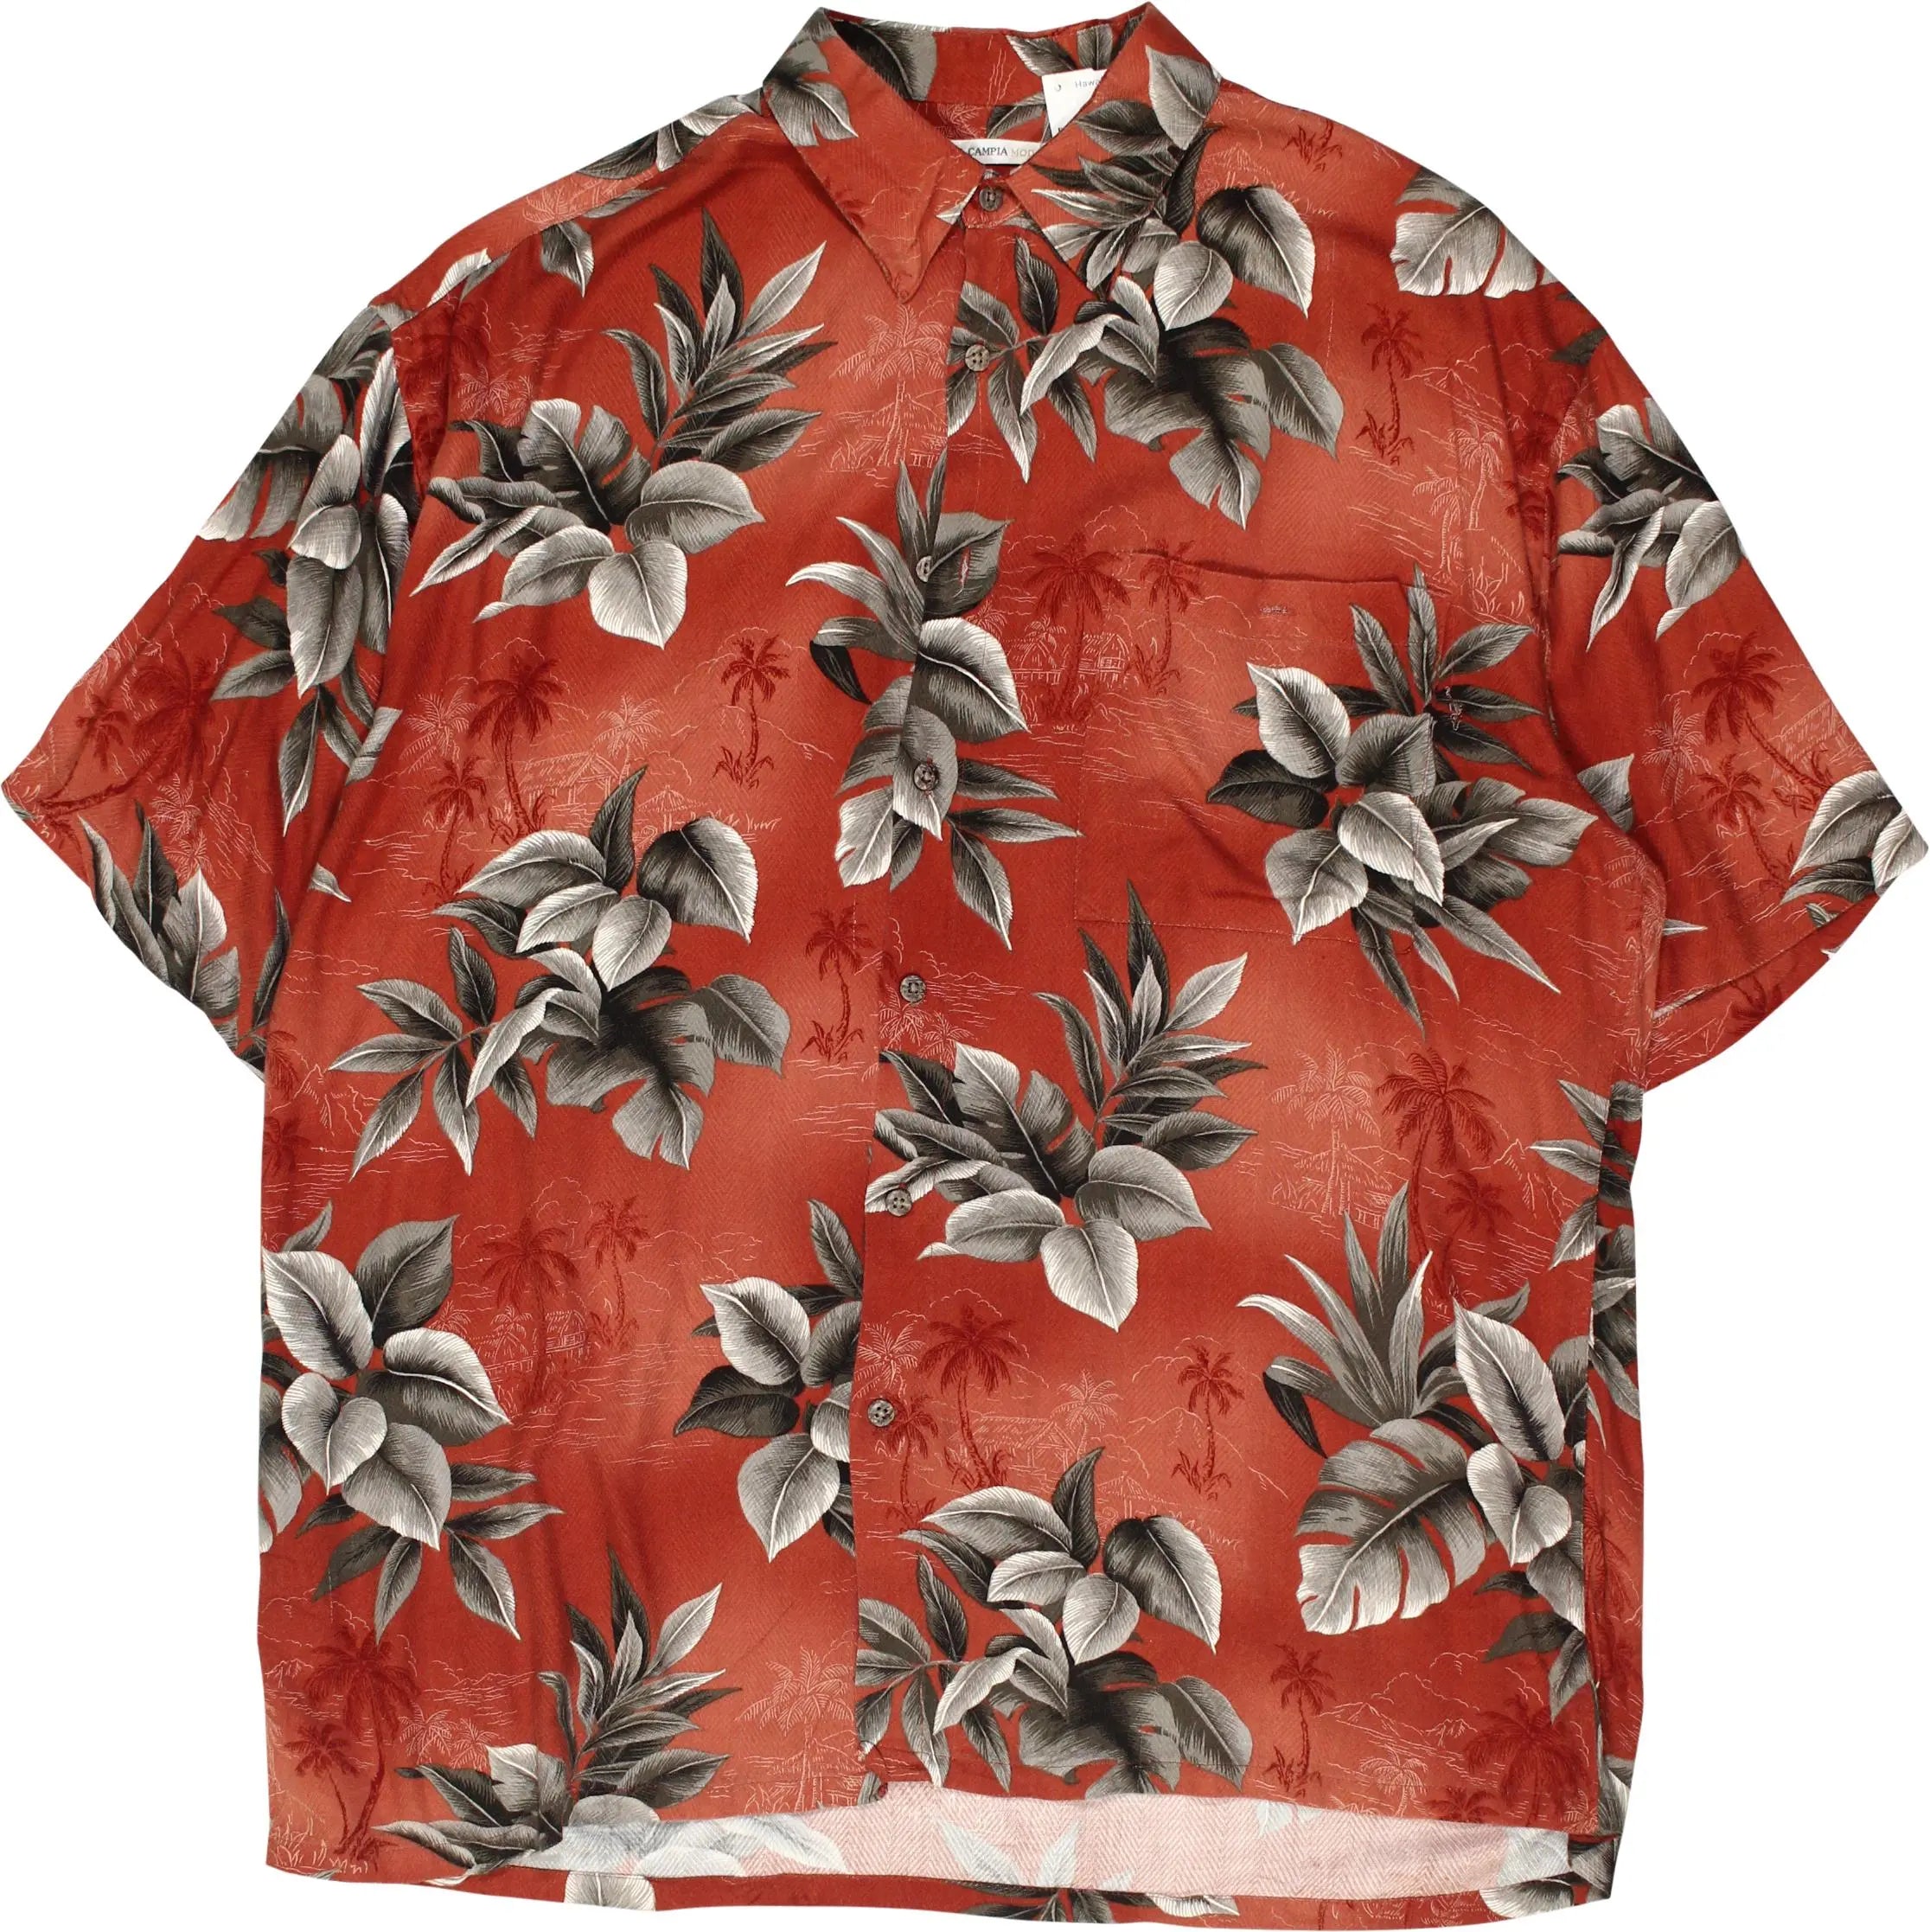 Campa Moda - Hawaiian Shirt- ThriftTale.com - Vintage and second handclothing